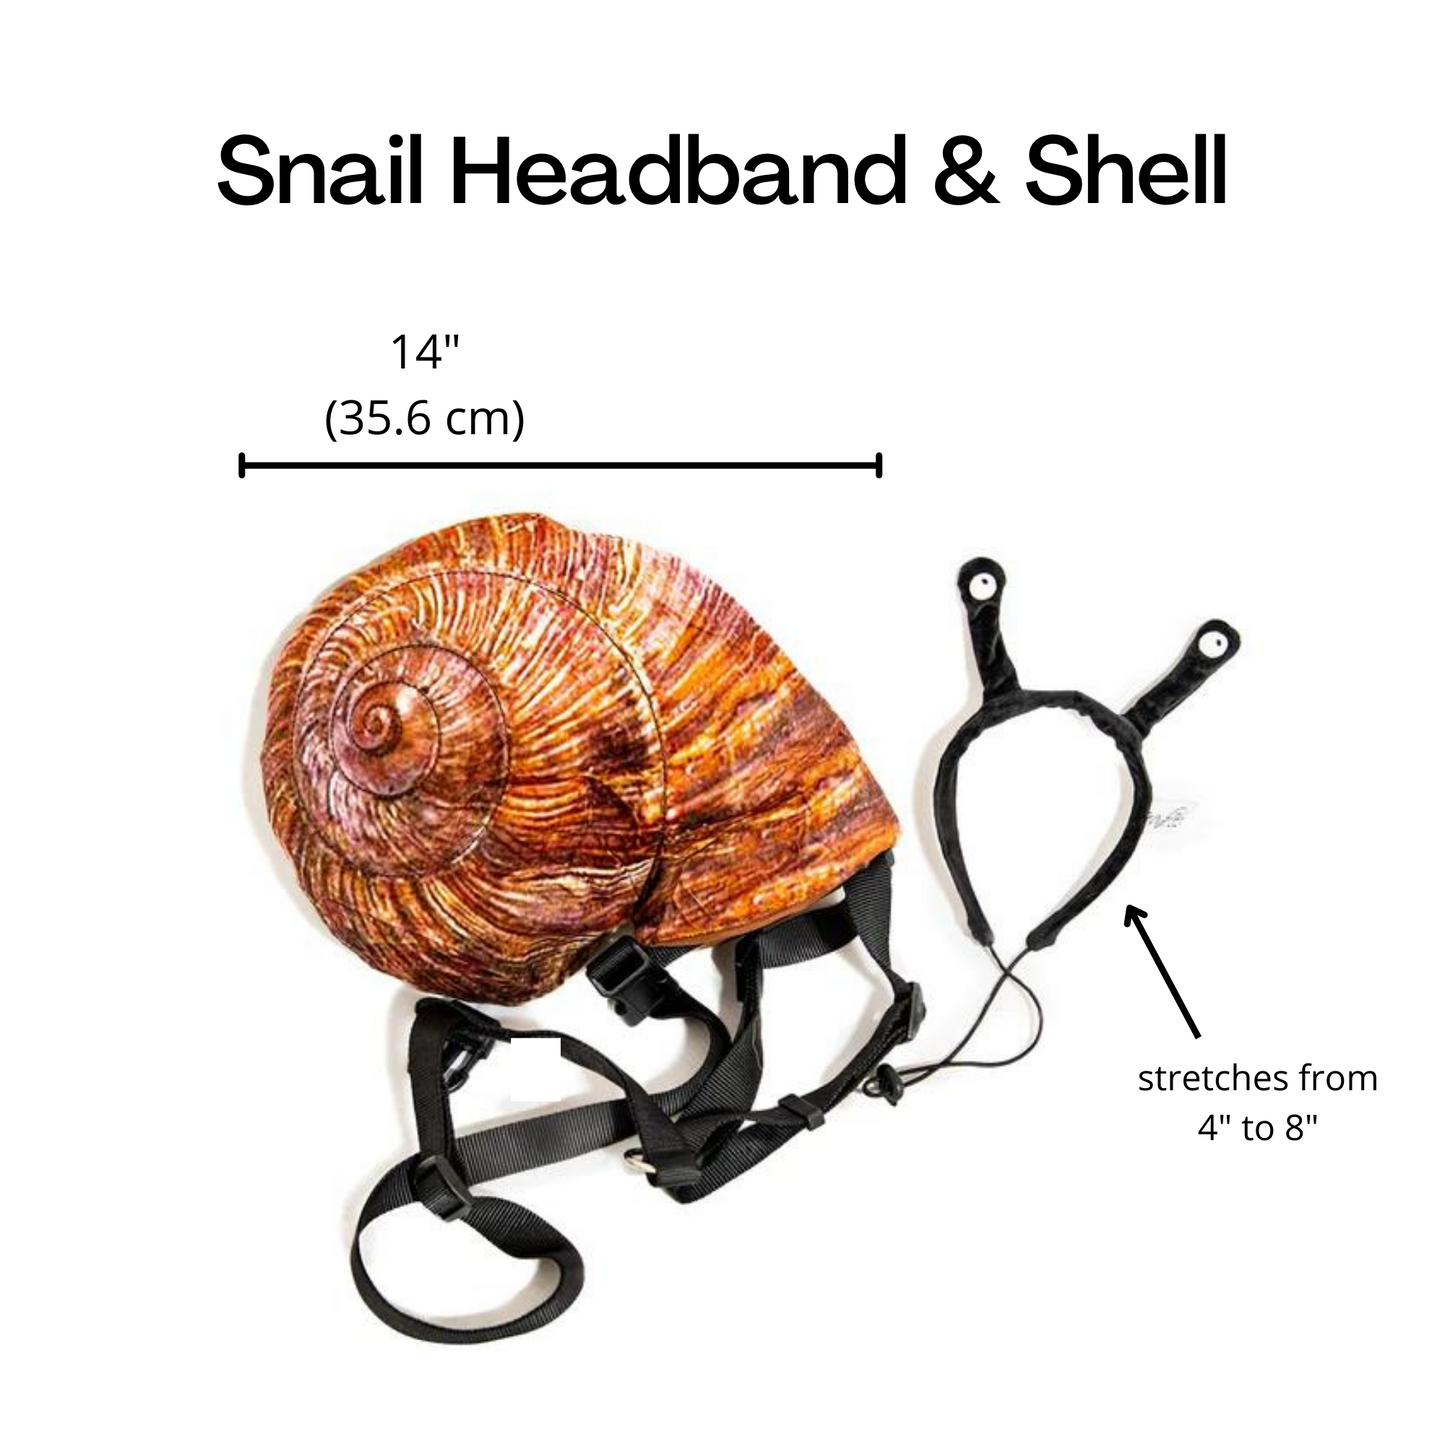 Midlee Snail Headband & Shell Dog Costume